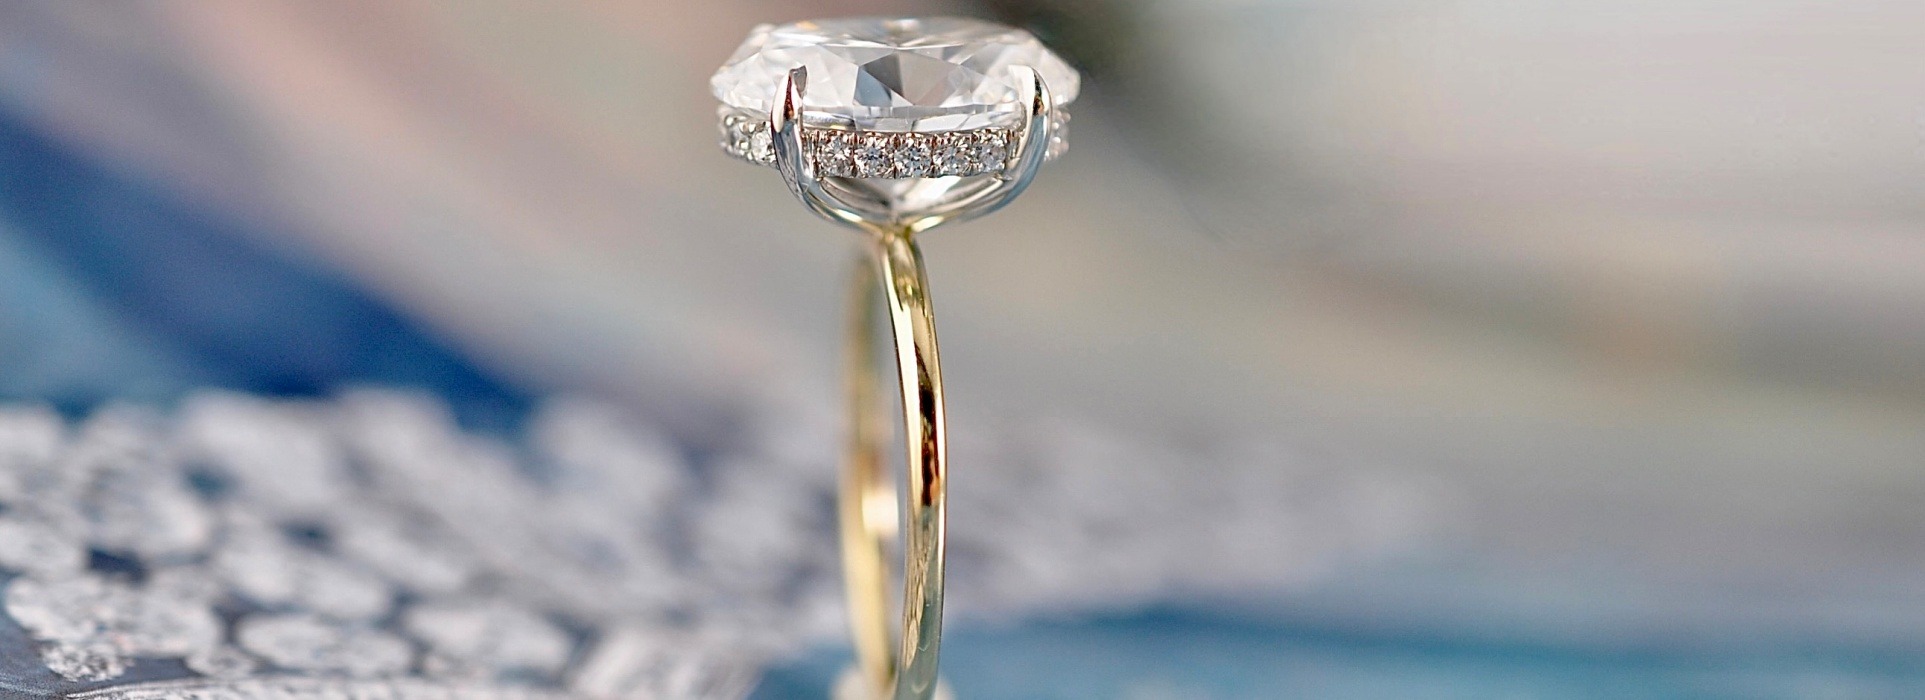 Boston Diamond Studio's dazzling diamond engagement ring